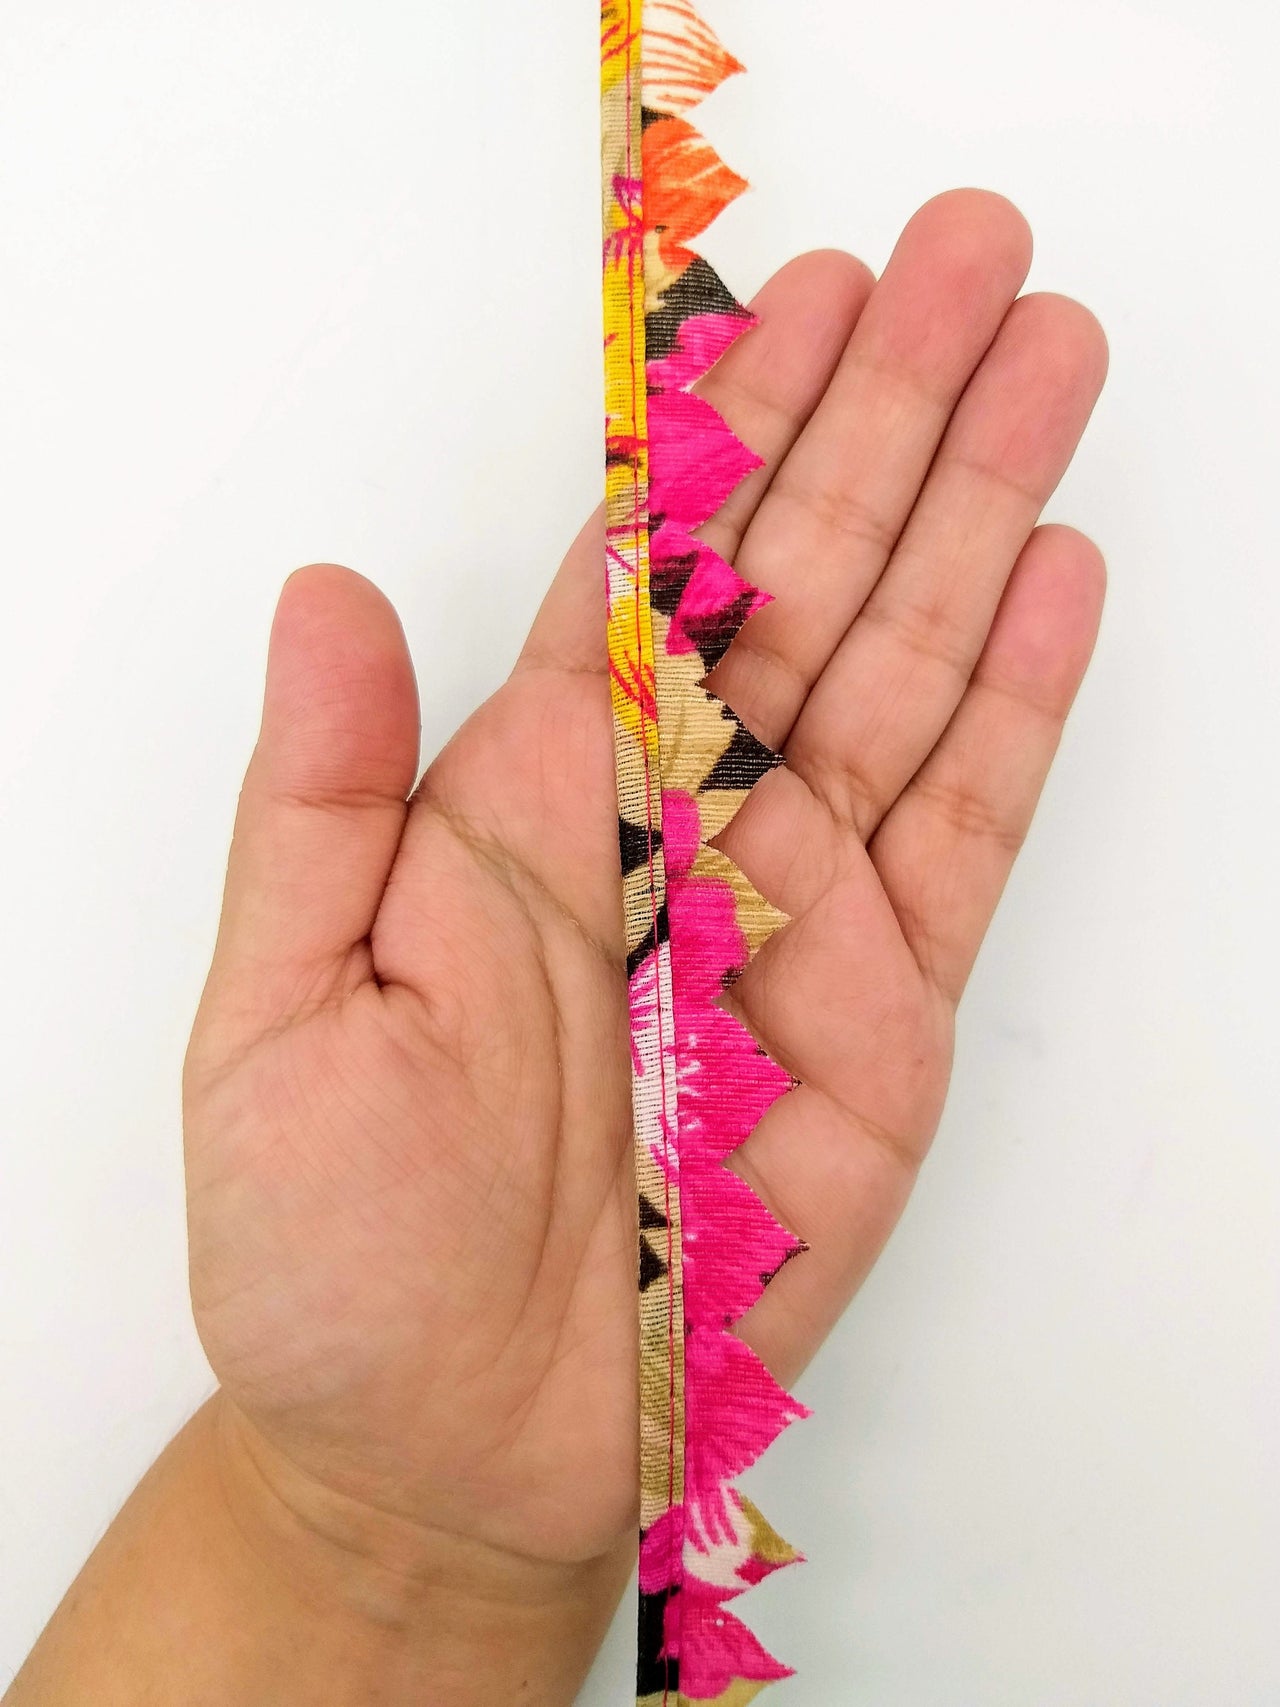 Fuchsia Pink and Orange Floral Fringe Bunting Trim Triangle Shape, 9 Yard Lace Trim, Fringing Trim